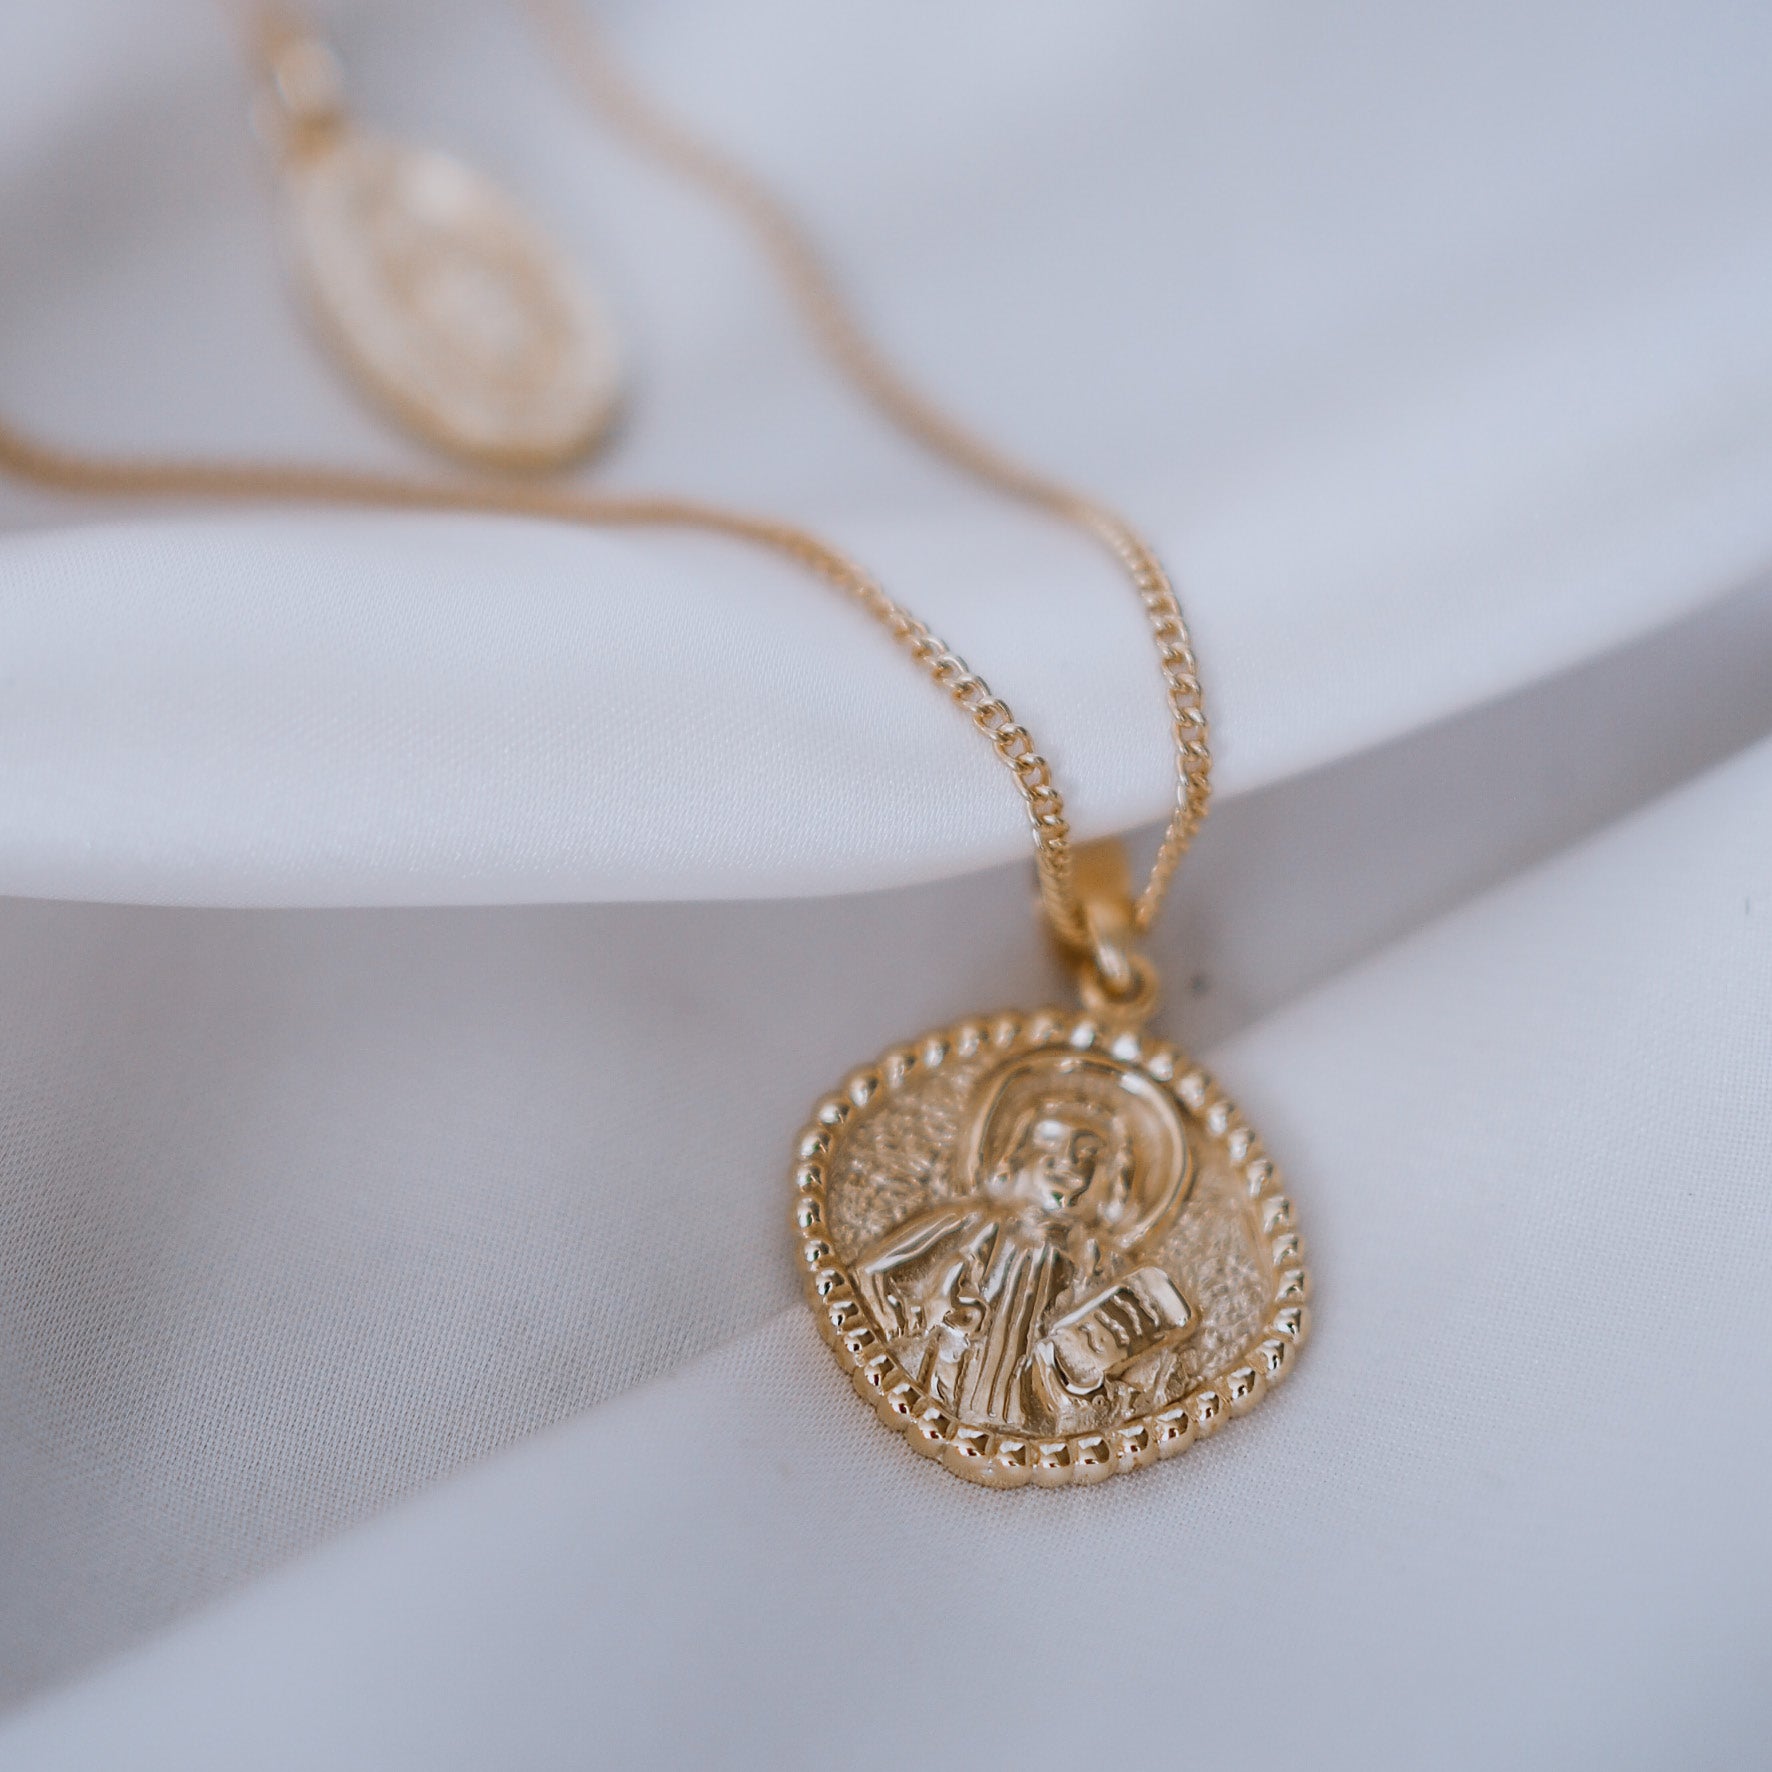 Solid 9kt Gold St John Friendship Pendant Necklace